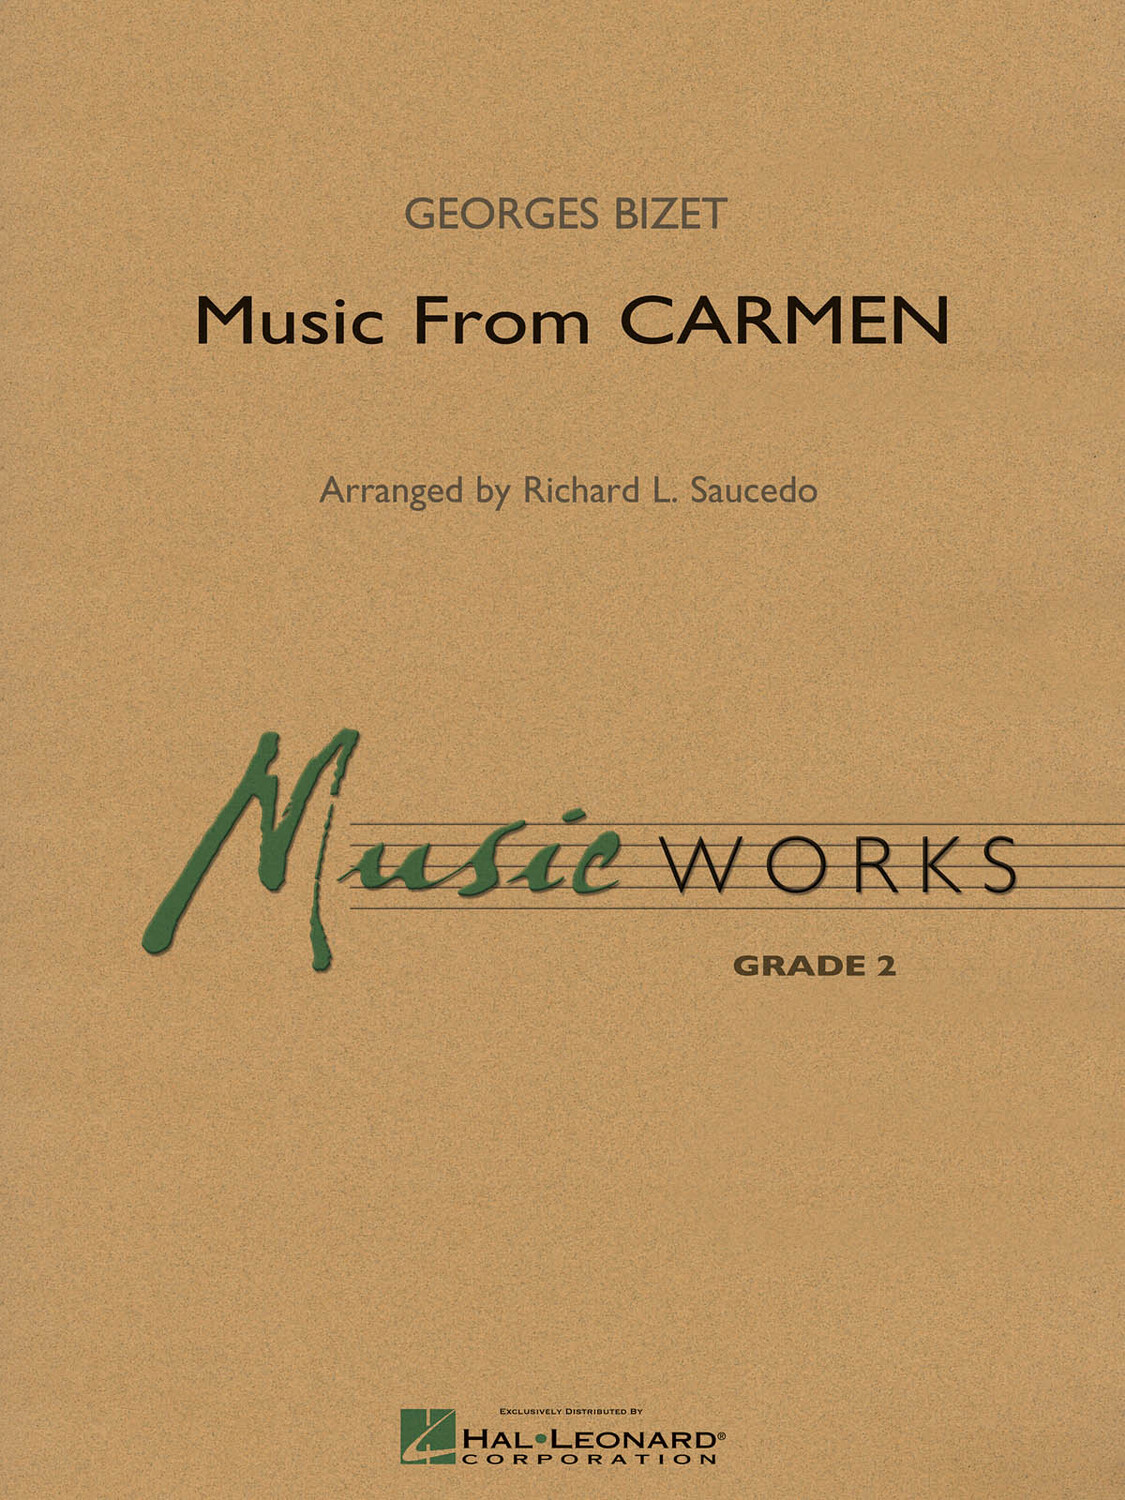 Cover: 73999509793 | Music from Carmen | Georges Bizet | MusicWorks Grade 2 | Hal Leonard